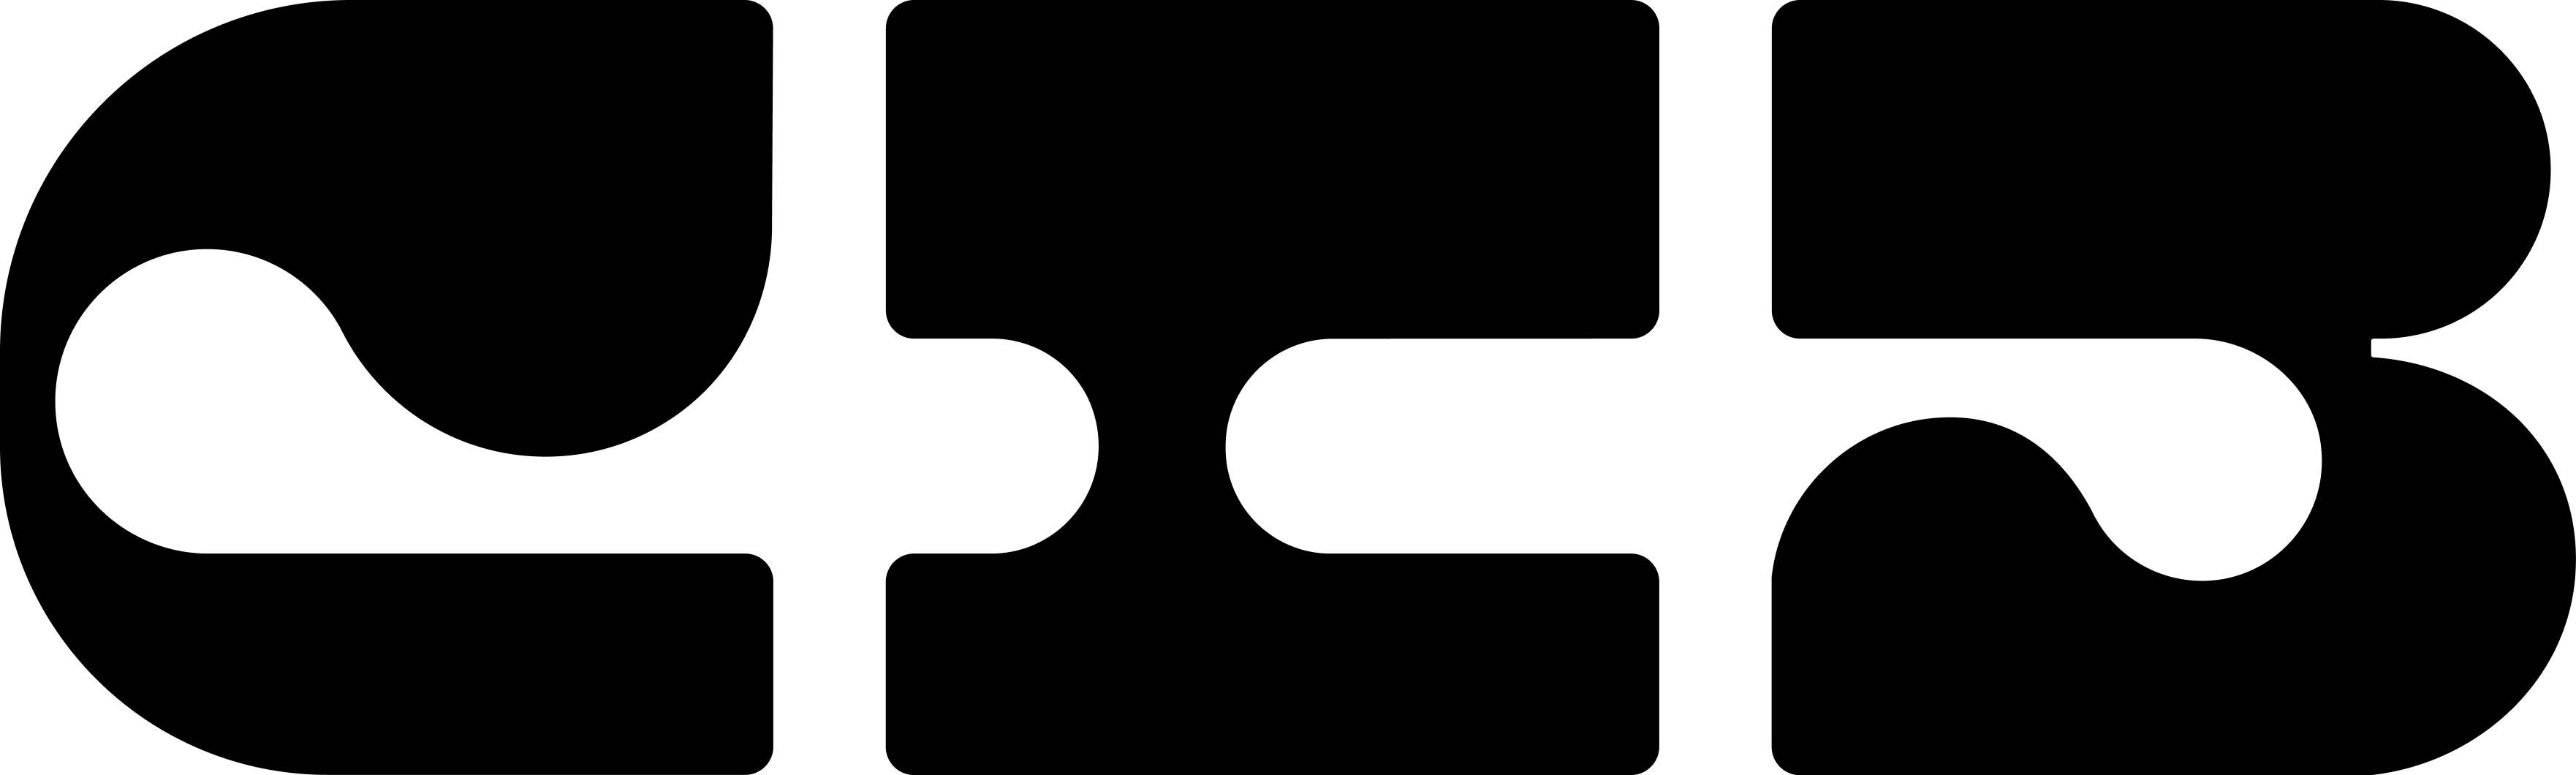 Logo CIB - CAPSTON